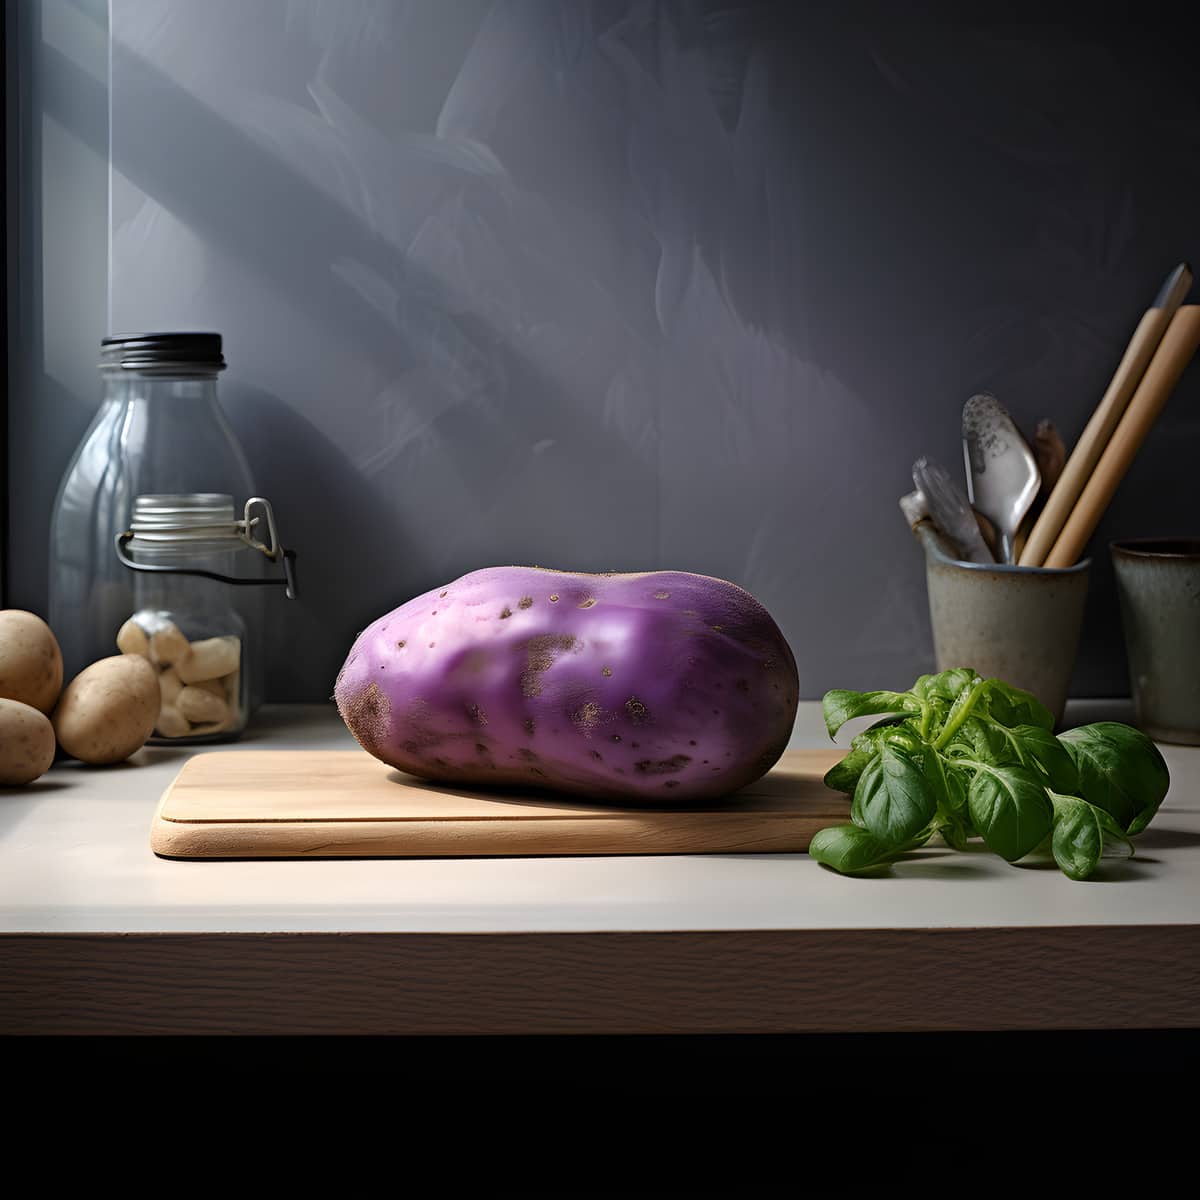 Vitelotte Potatoes on a kitchen counter